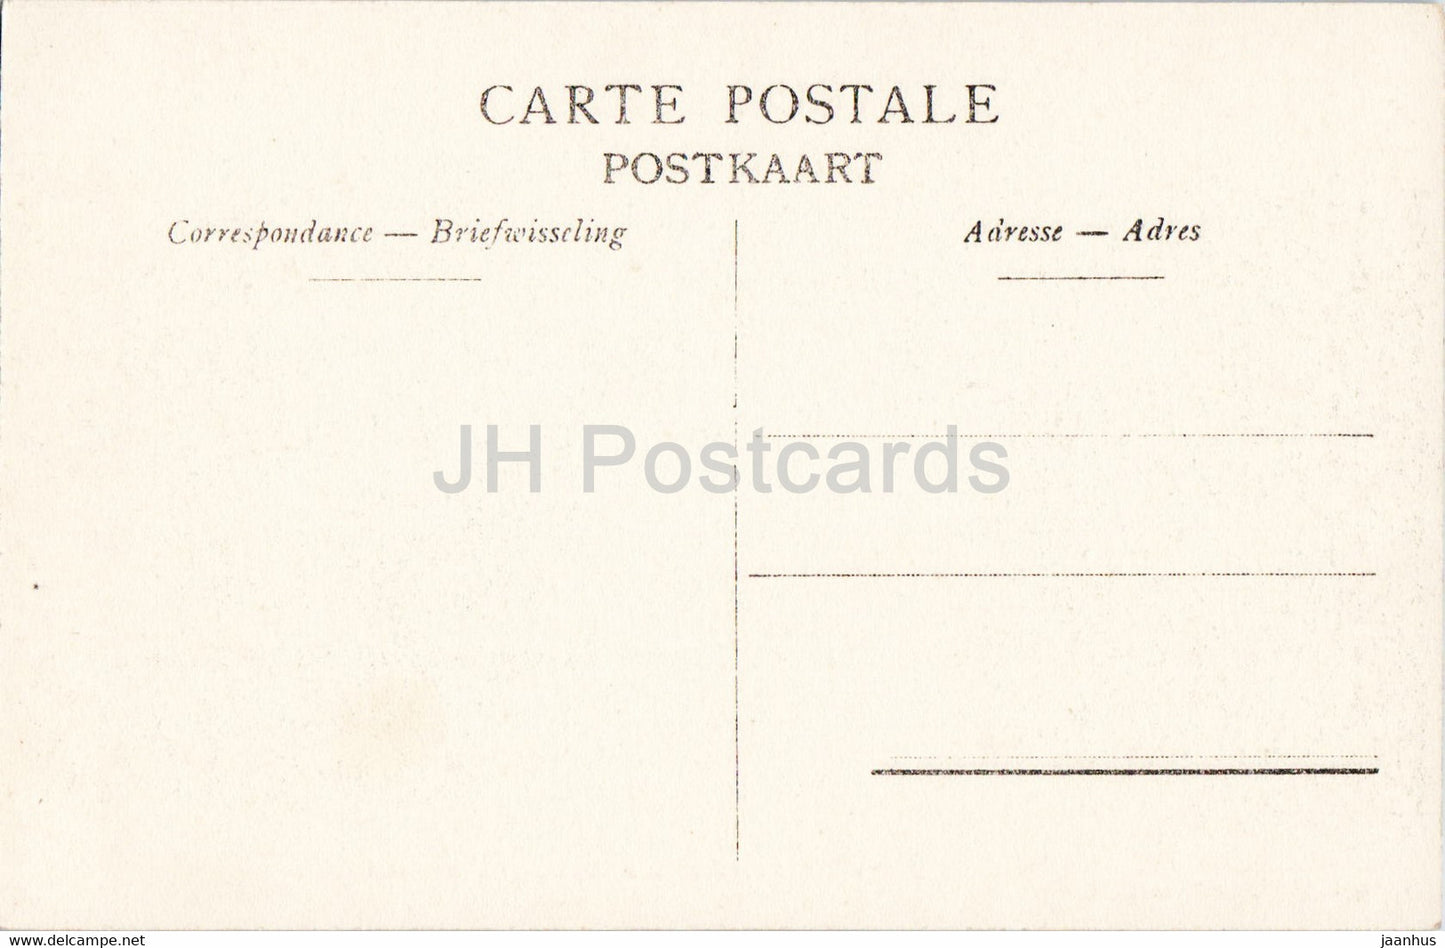 Anvers - Antwerpen - Vue a vol d'oiseau de l'Avenue De Keyser - tram - 454 - old postcard - Belgium - unused